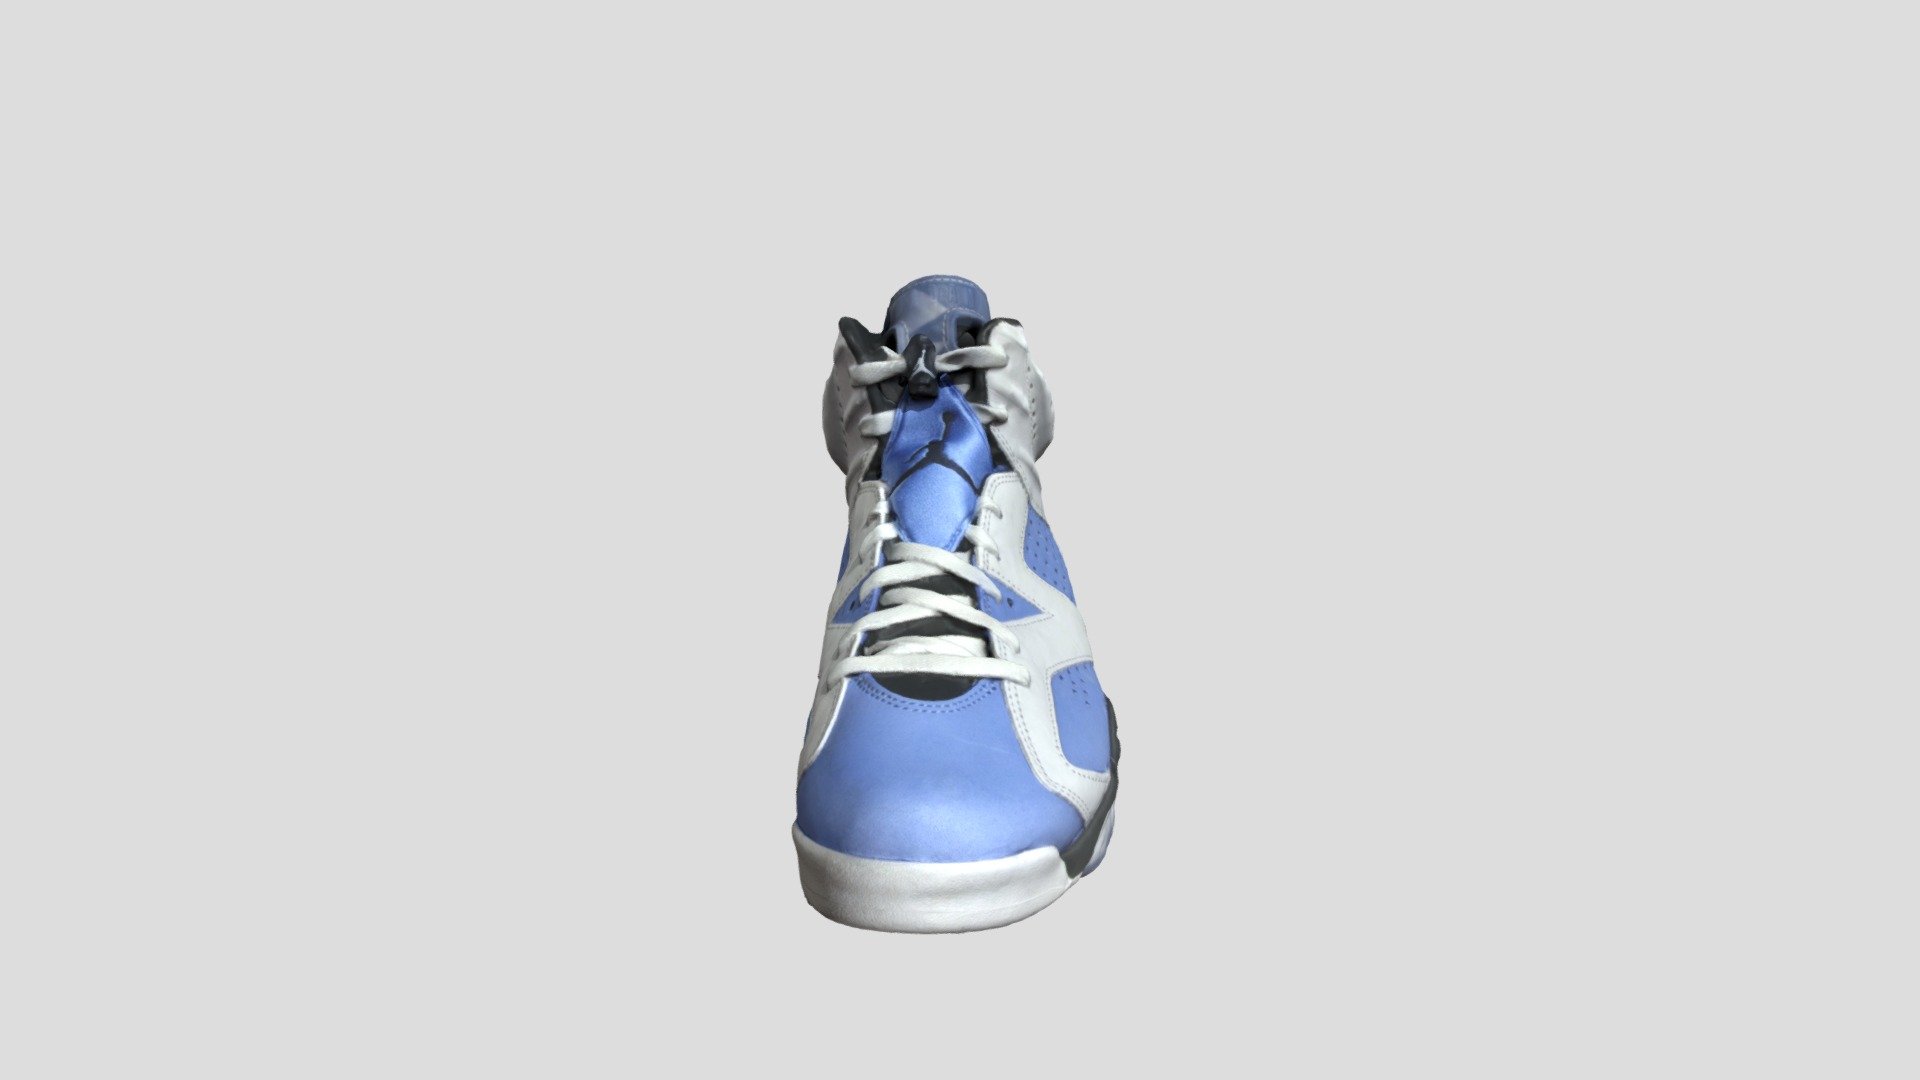 Shoe 3d scan, 
credits : polycam - Air Jordan 6 polycam scan - Download Free 3D model by Shyam Barange (@shyam_barange) 3d model